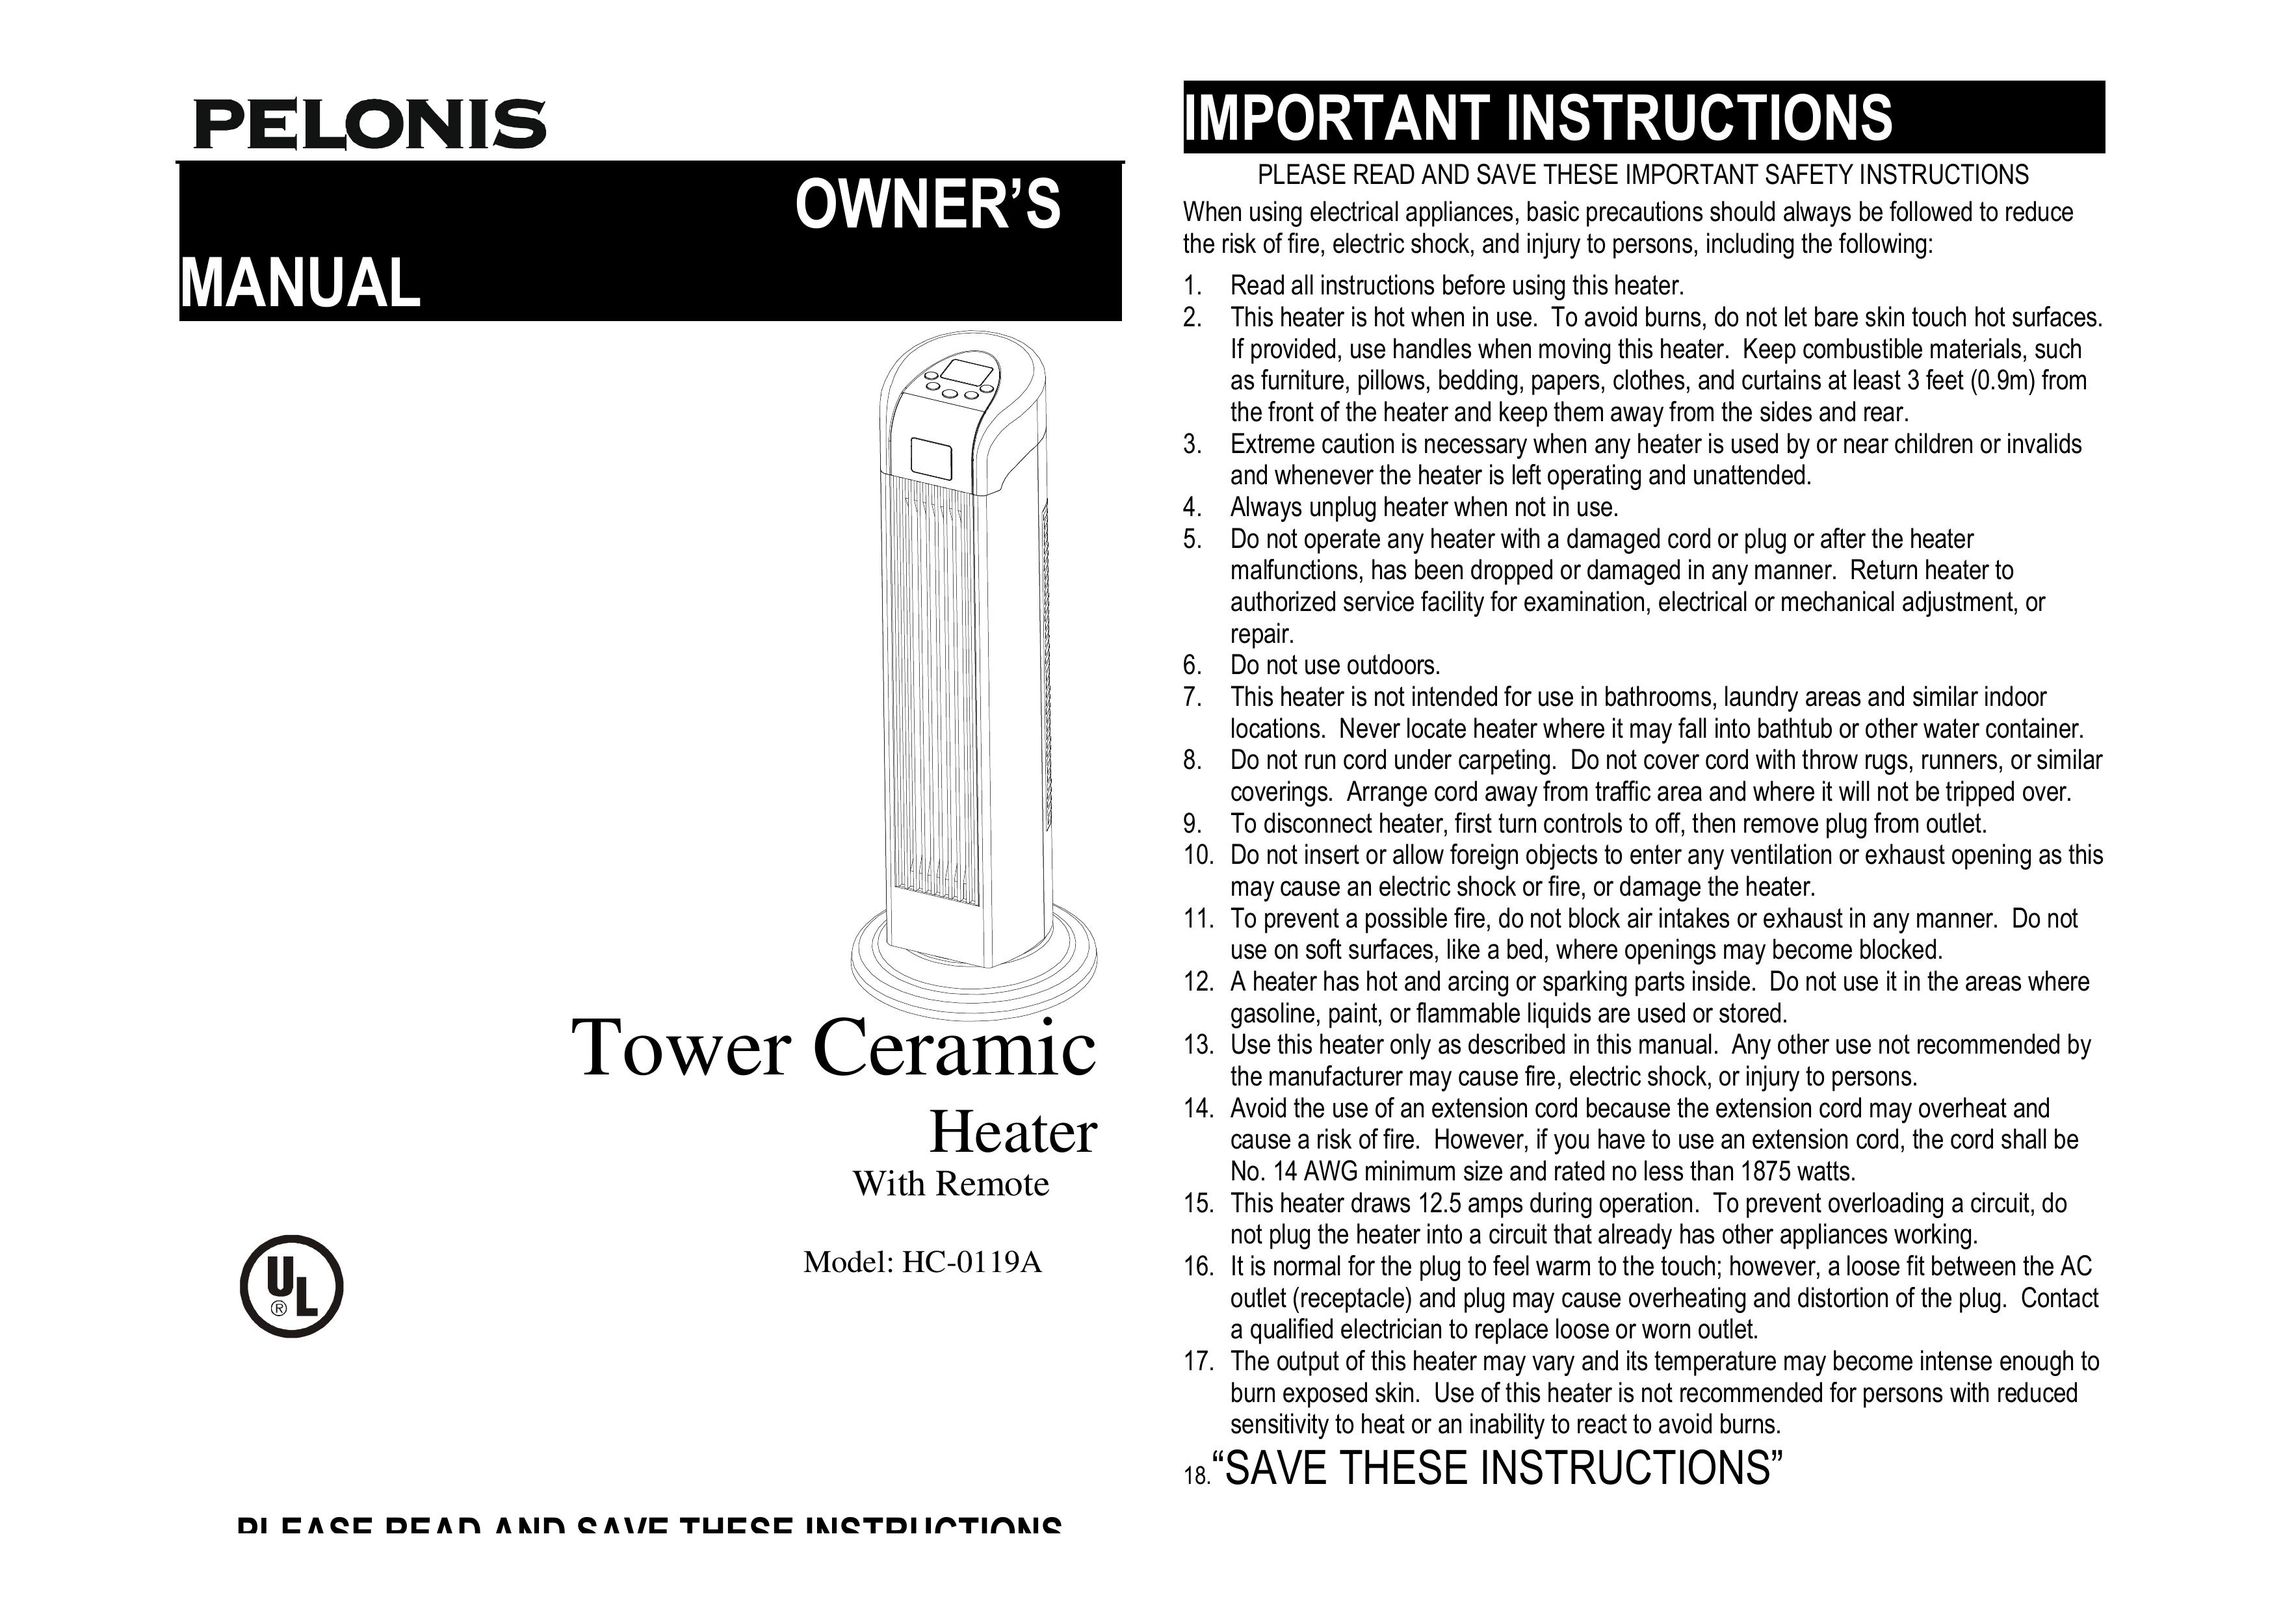 Pelonis HC-0119A Electric Heater User Manual